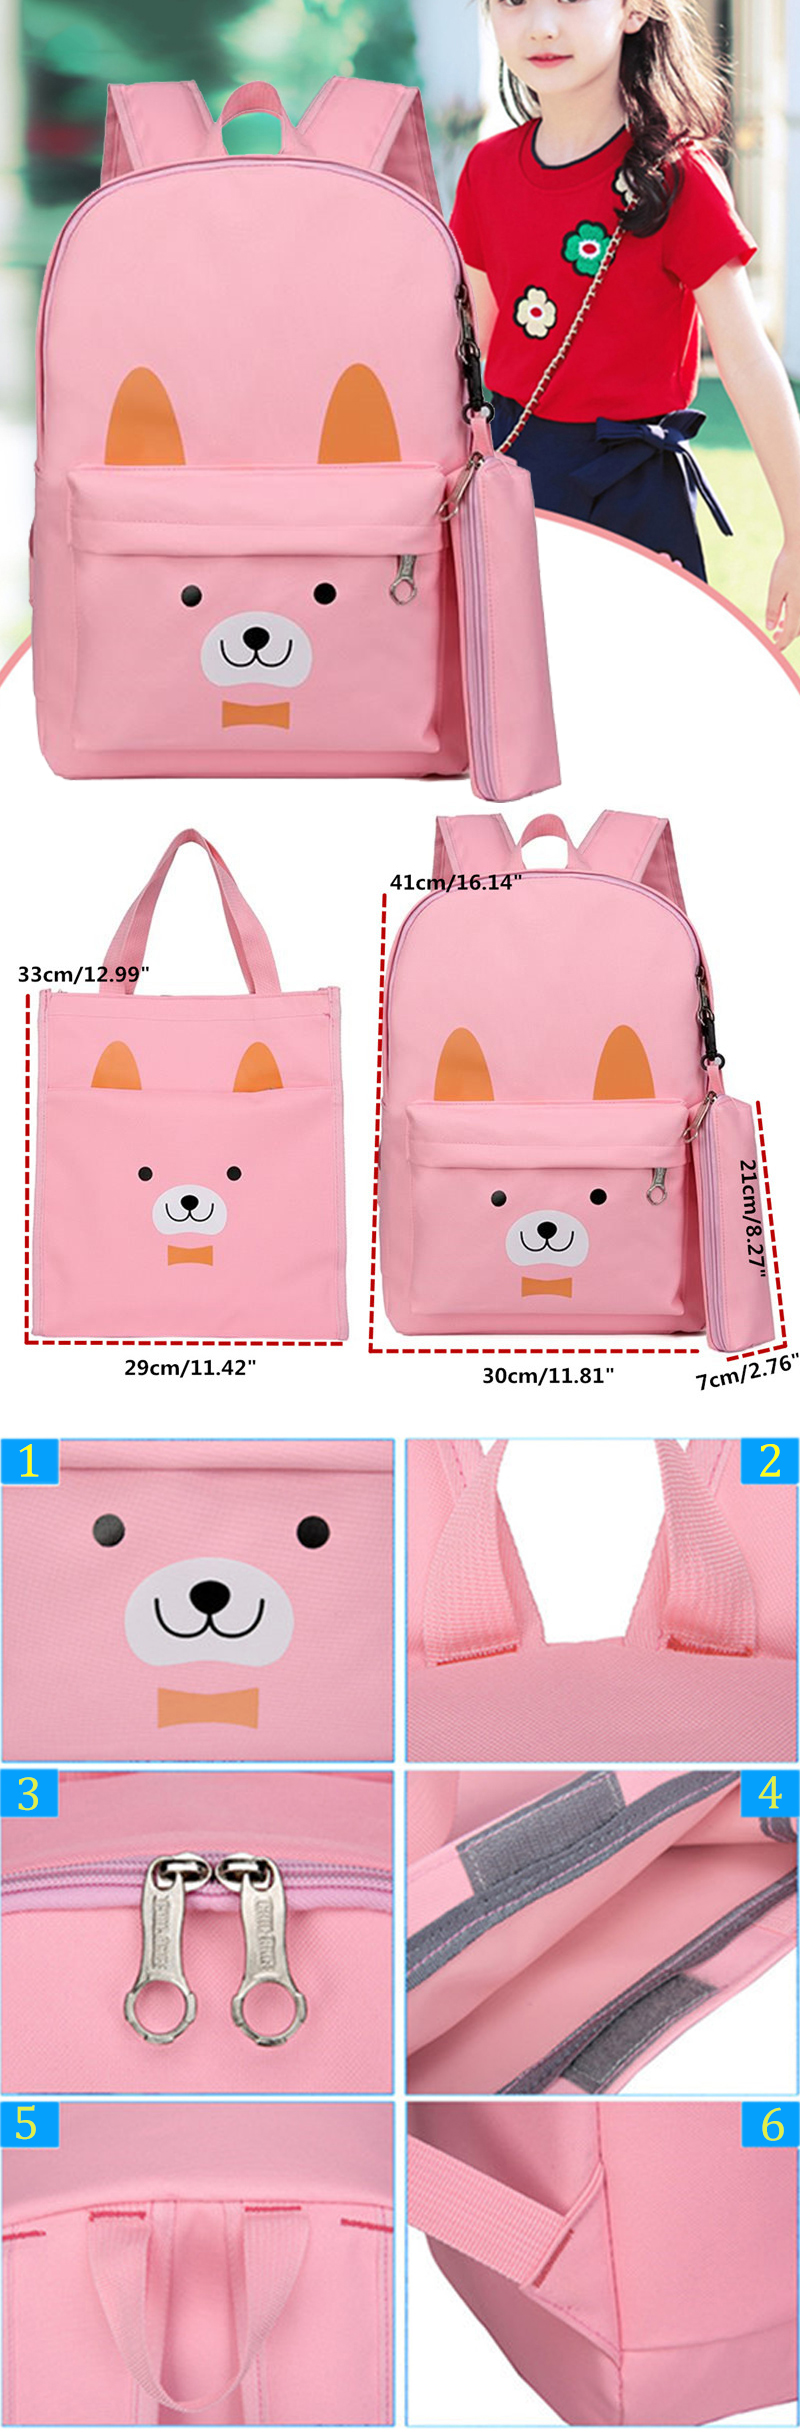 3-Pcs-School-Bag-Sets-Canvas-Backpack-Shoulder-Bags-Handbag-Camping-Travel-Bag-With-Pencil-Case-1353294-1